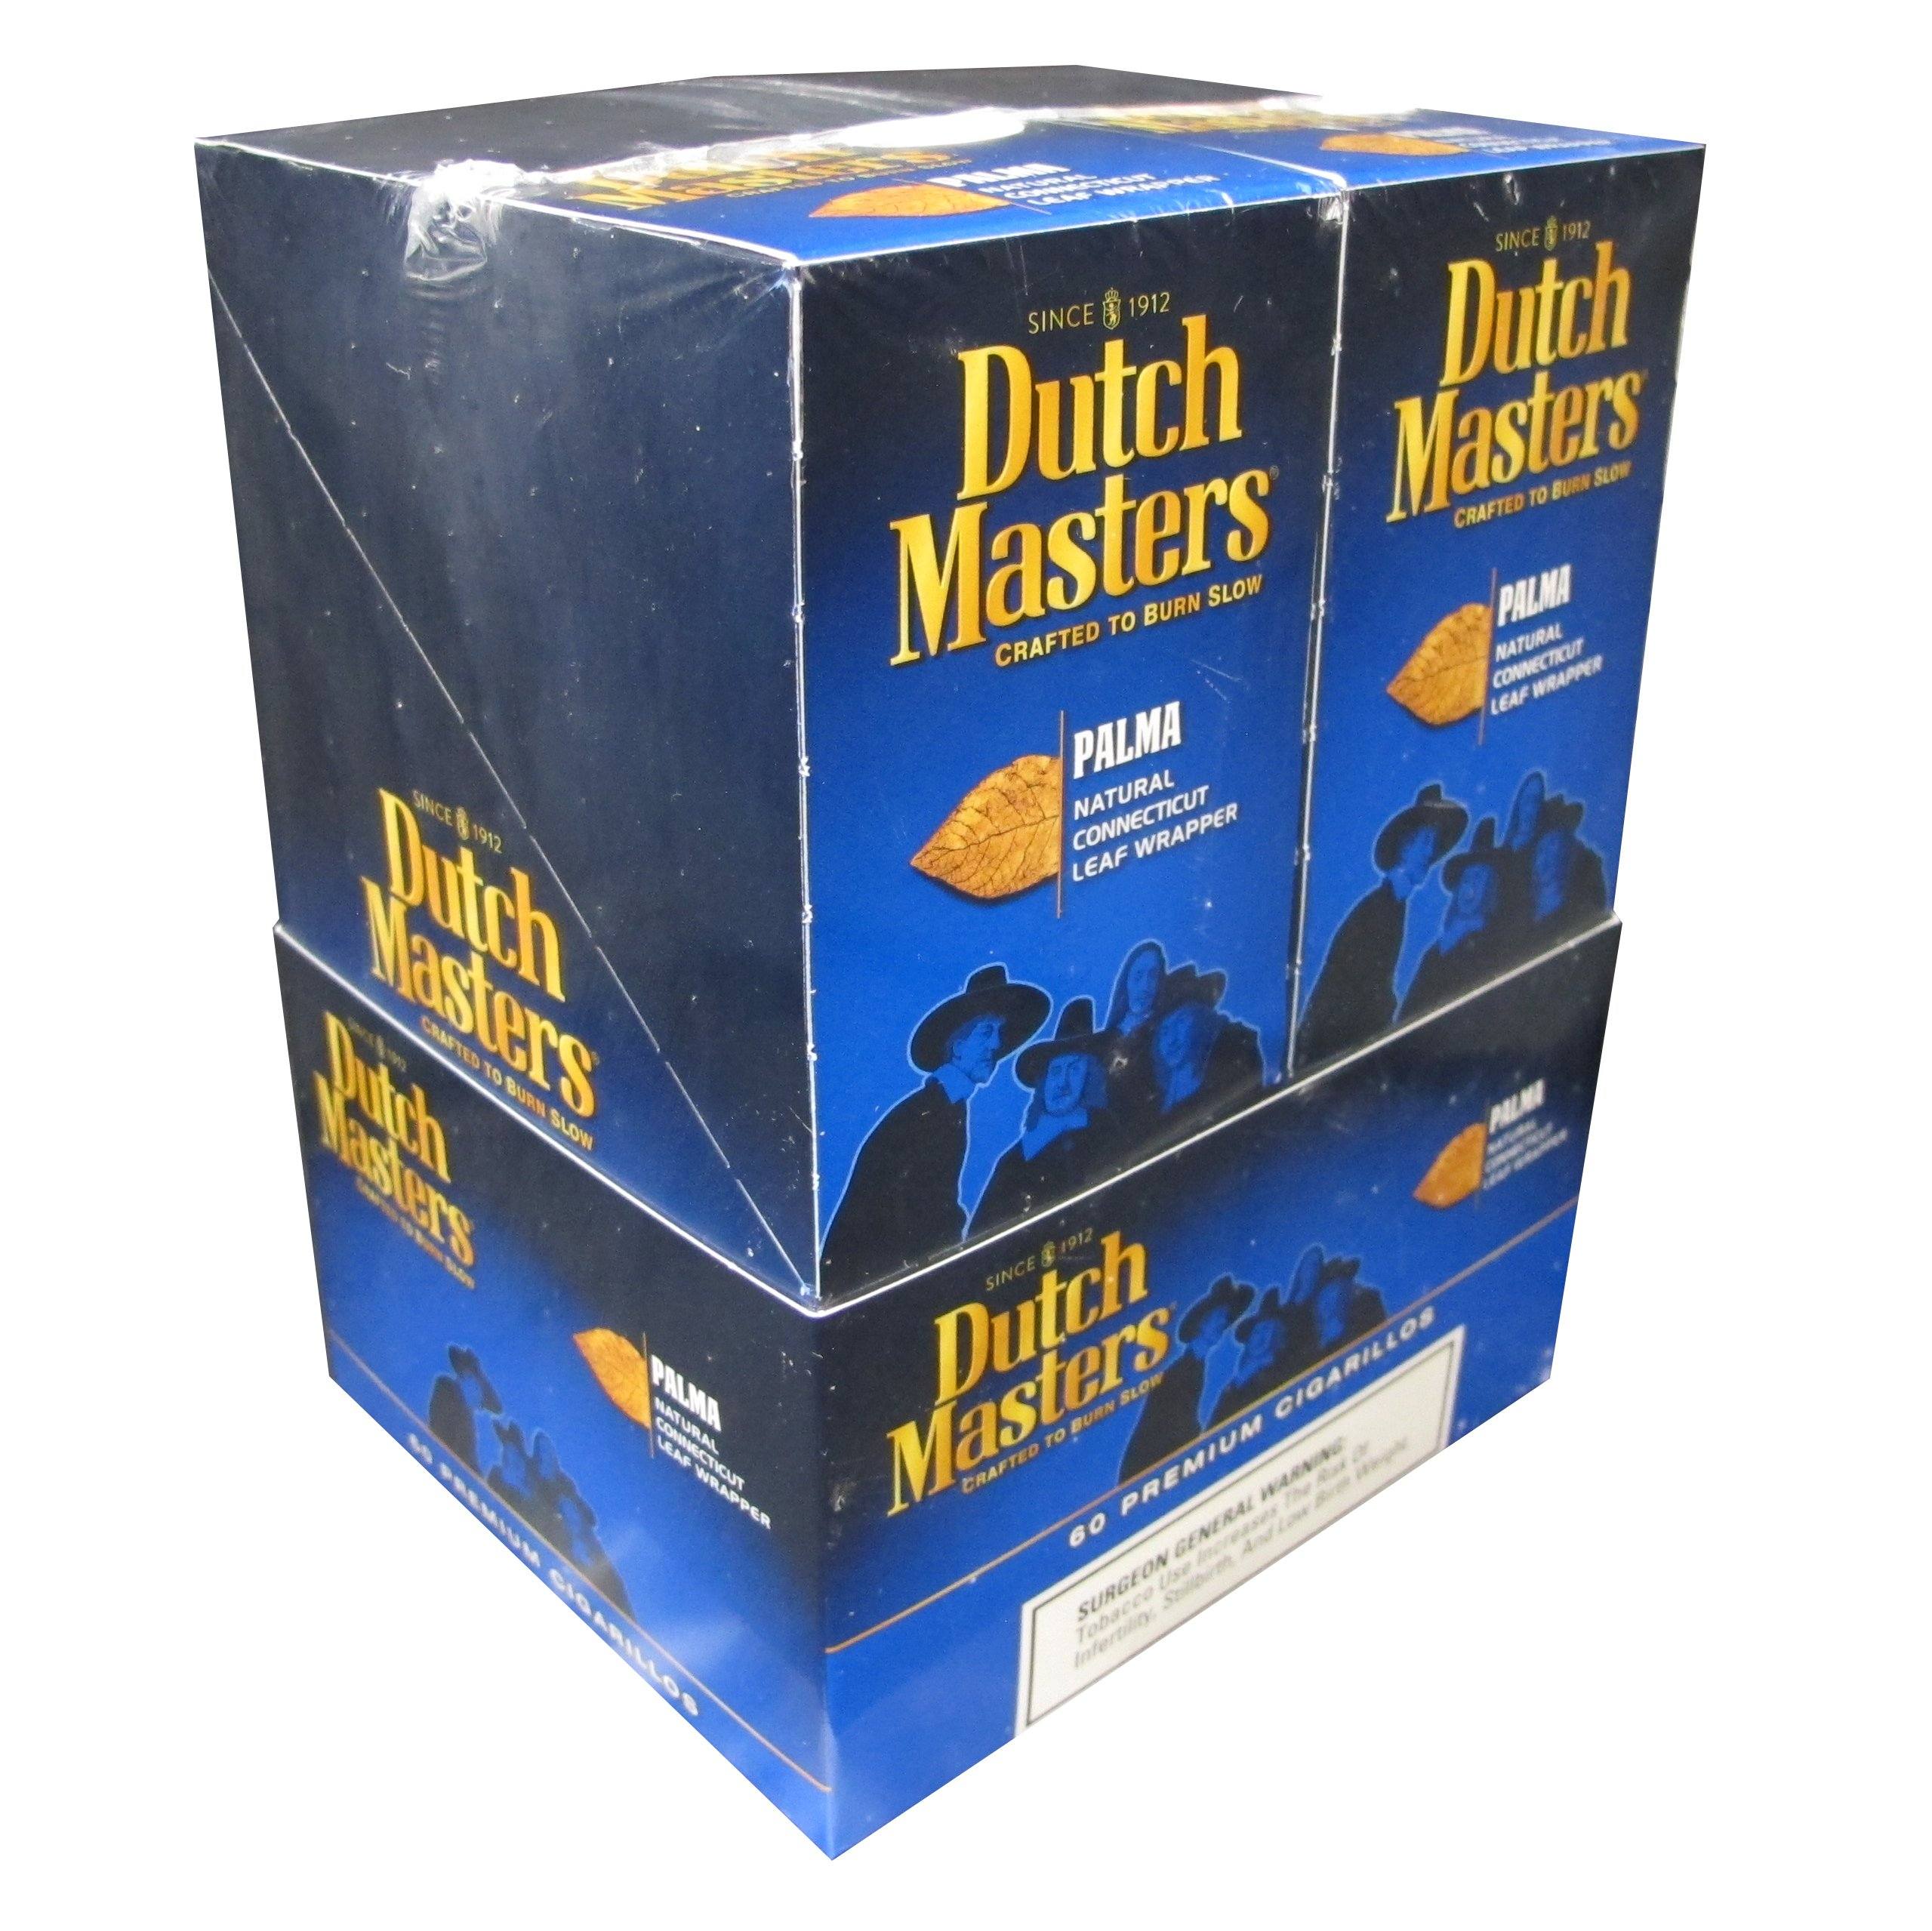 Dutch Masters Palma Cigarillos Bnb Tobacco